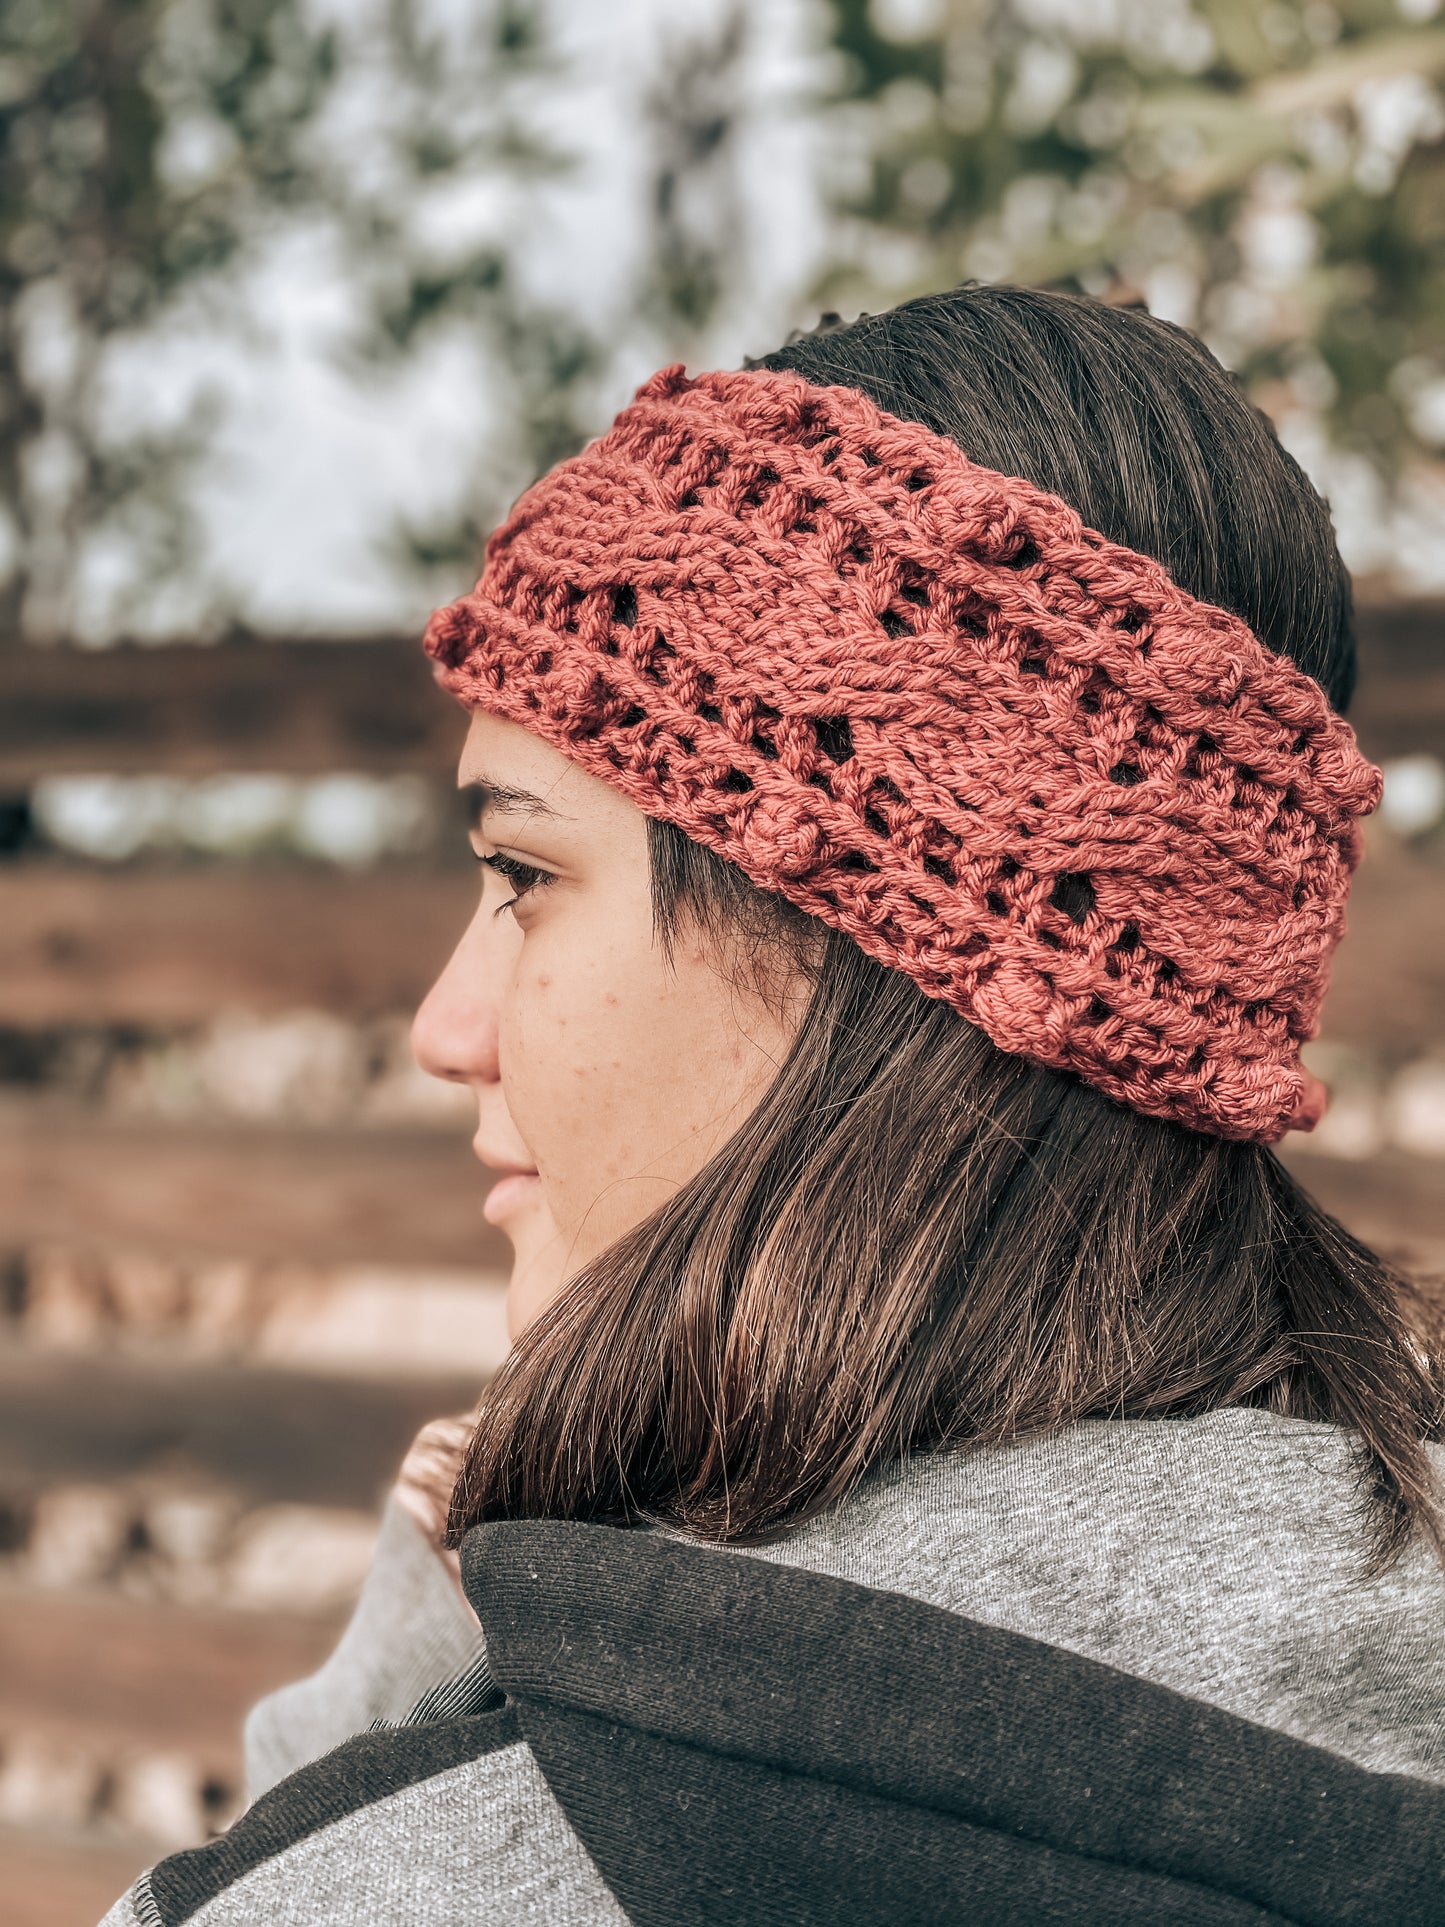 The Cable Headband Crochet pattern